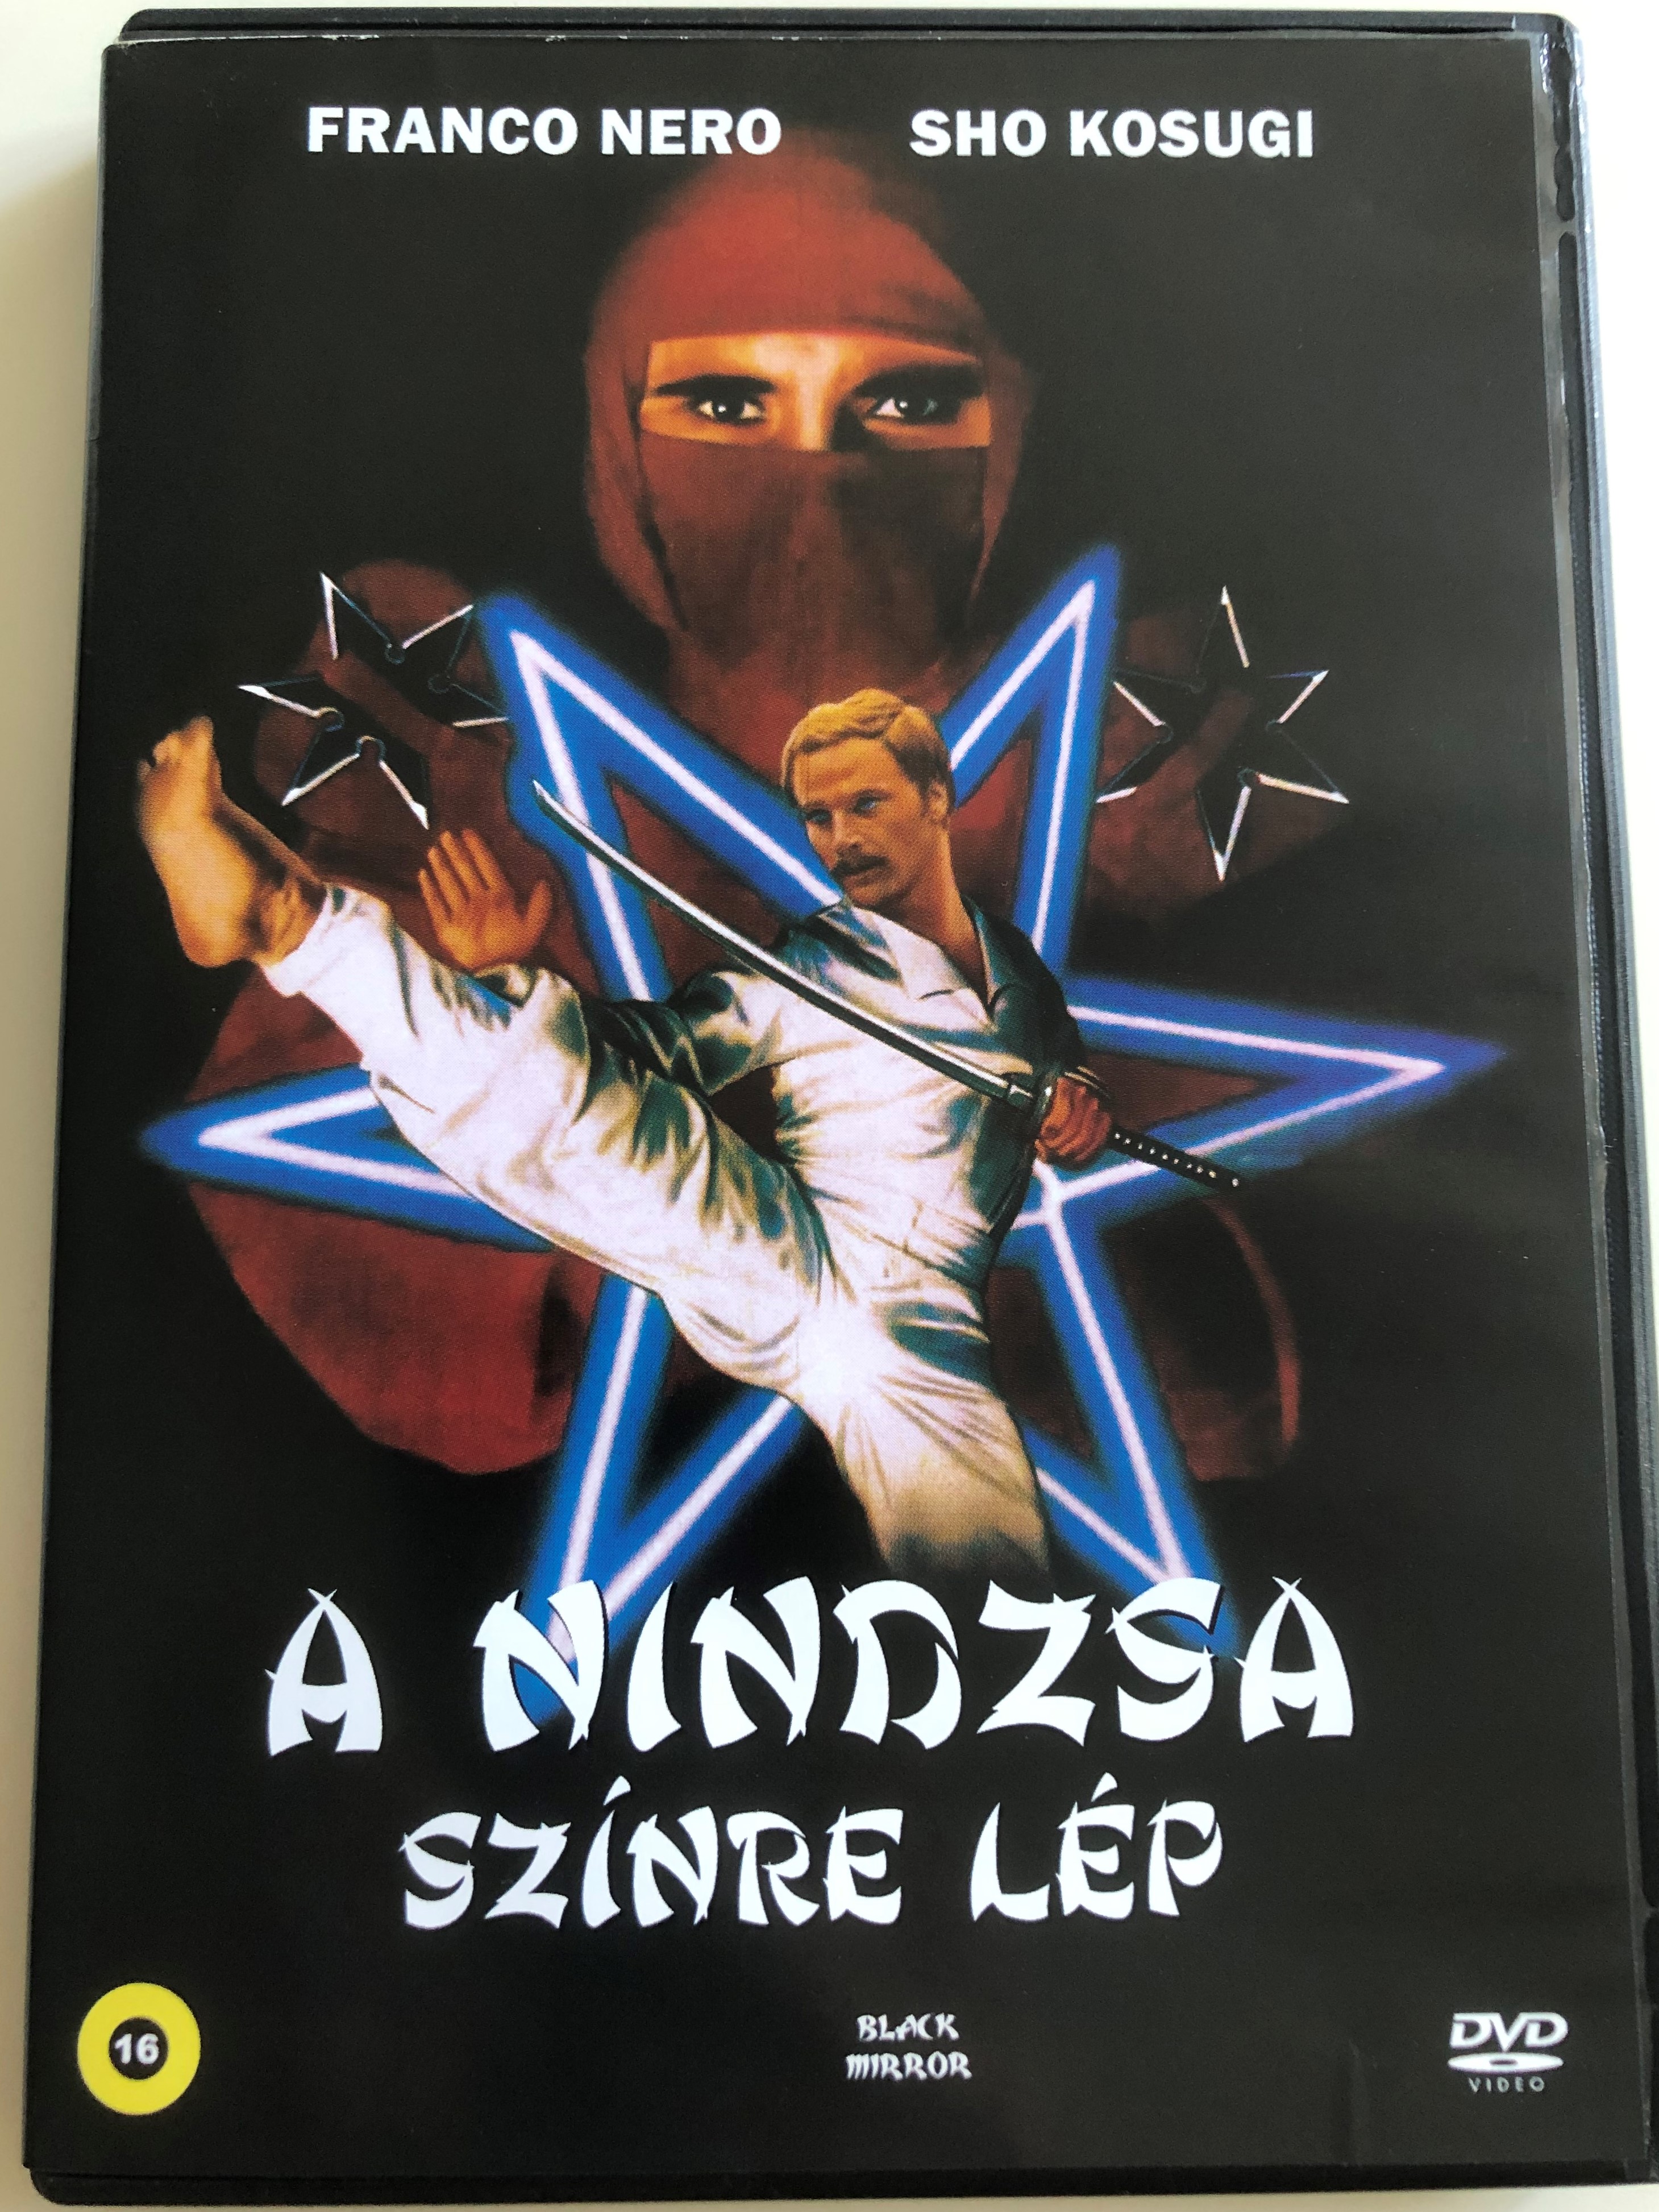 enter-the-ninja-dvd-1981-a-nindzsa-sz-nre-l-p-directed-by-menahem-golan-starring-franco-nero-susan-george-sho-kosugi-alex-courtney-will-hare-zachi-noy-constantin-de-goguel-dale-ishimoto-christopher-george-1-.jpg